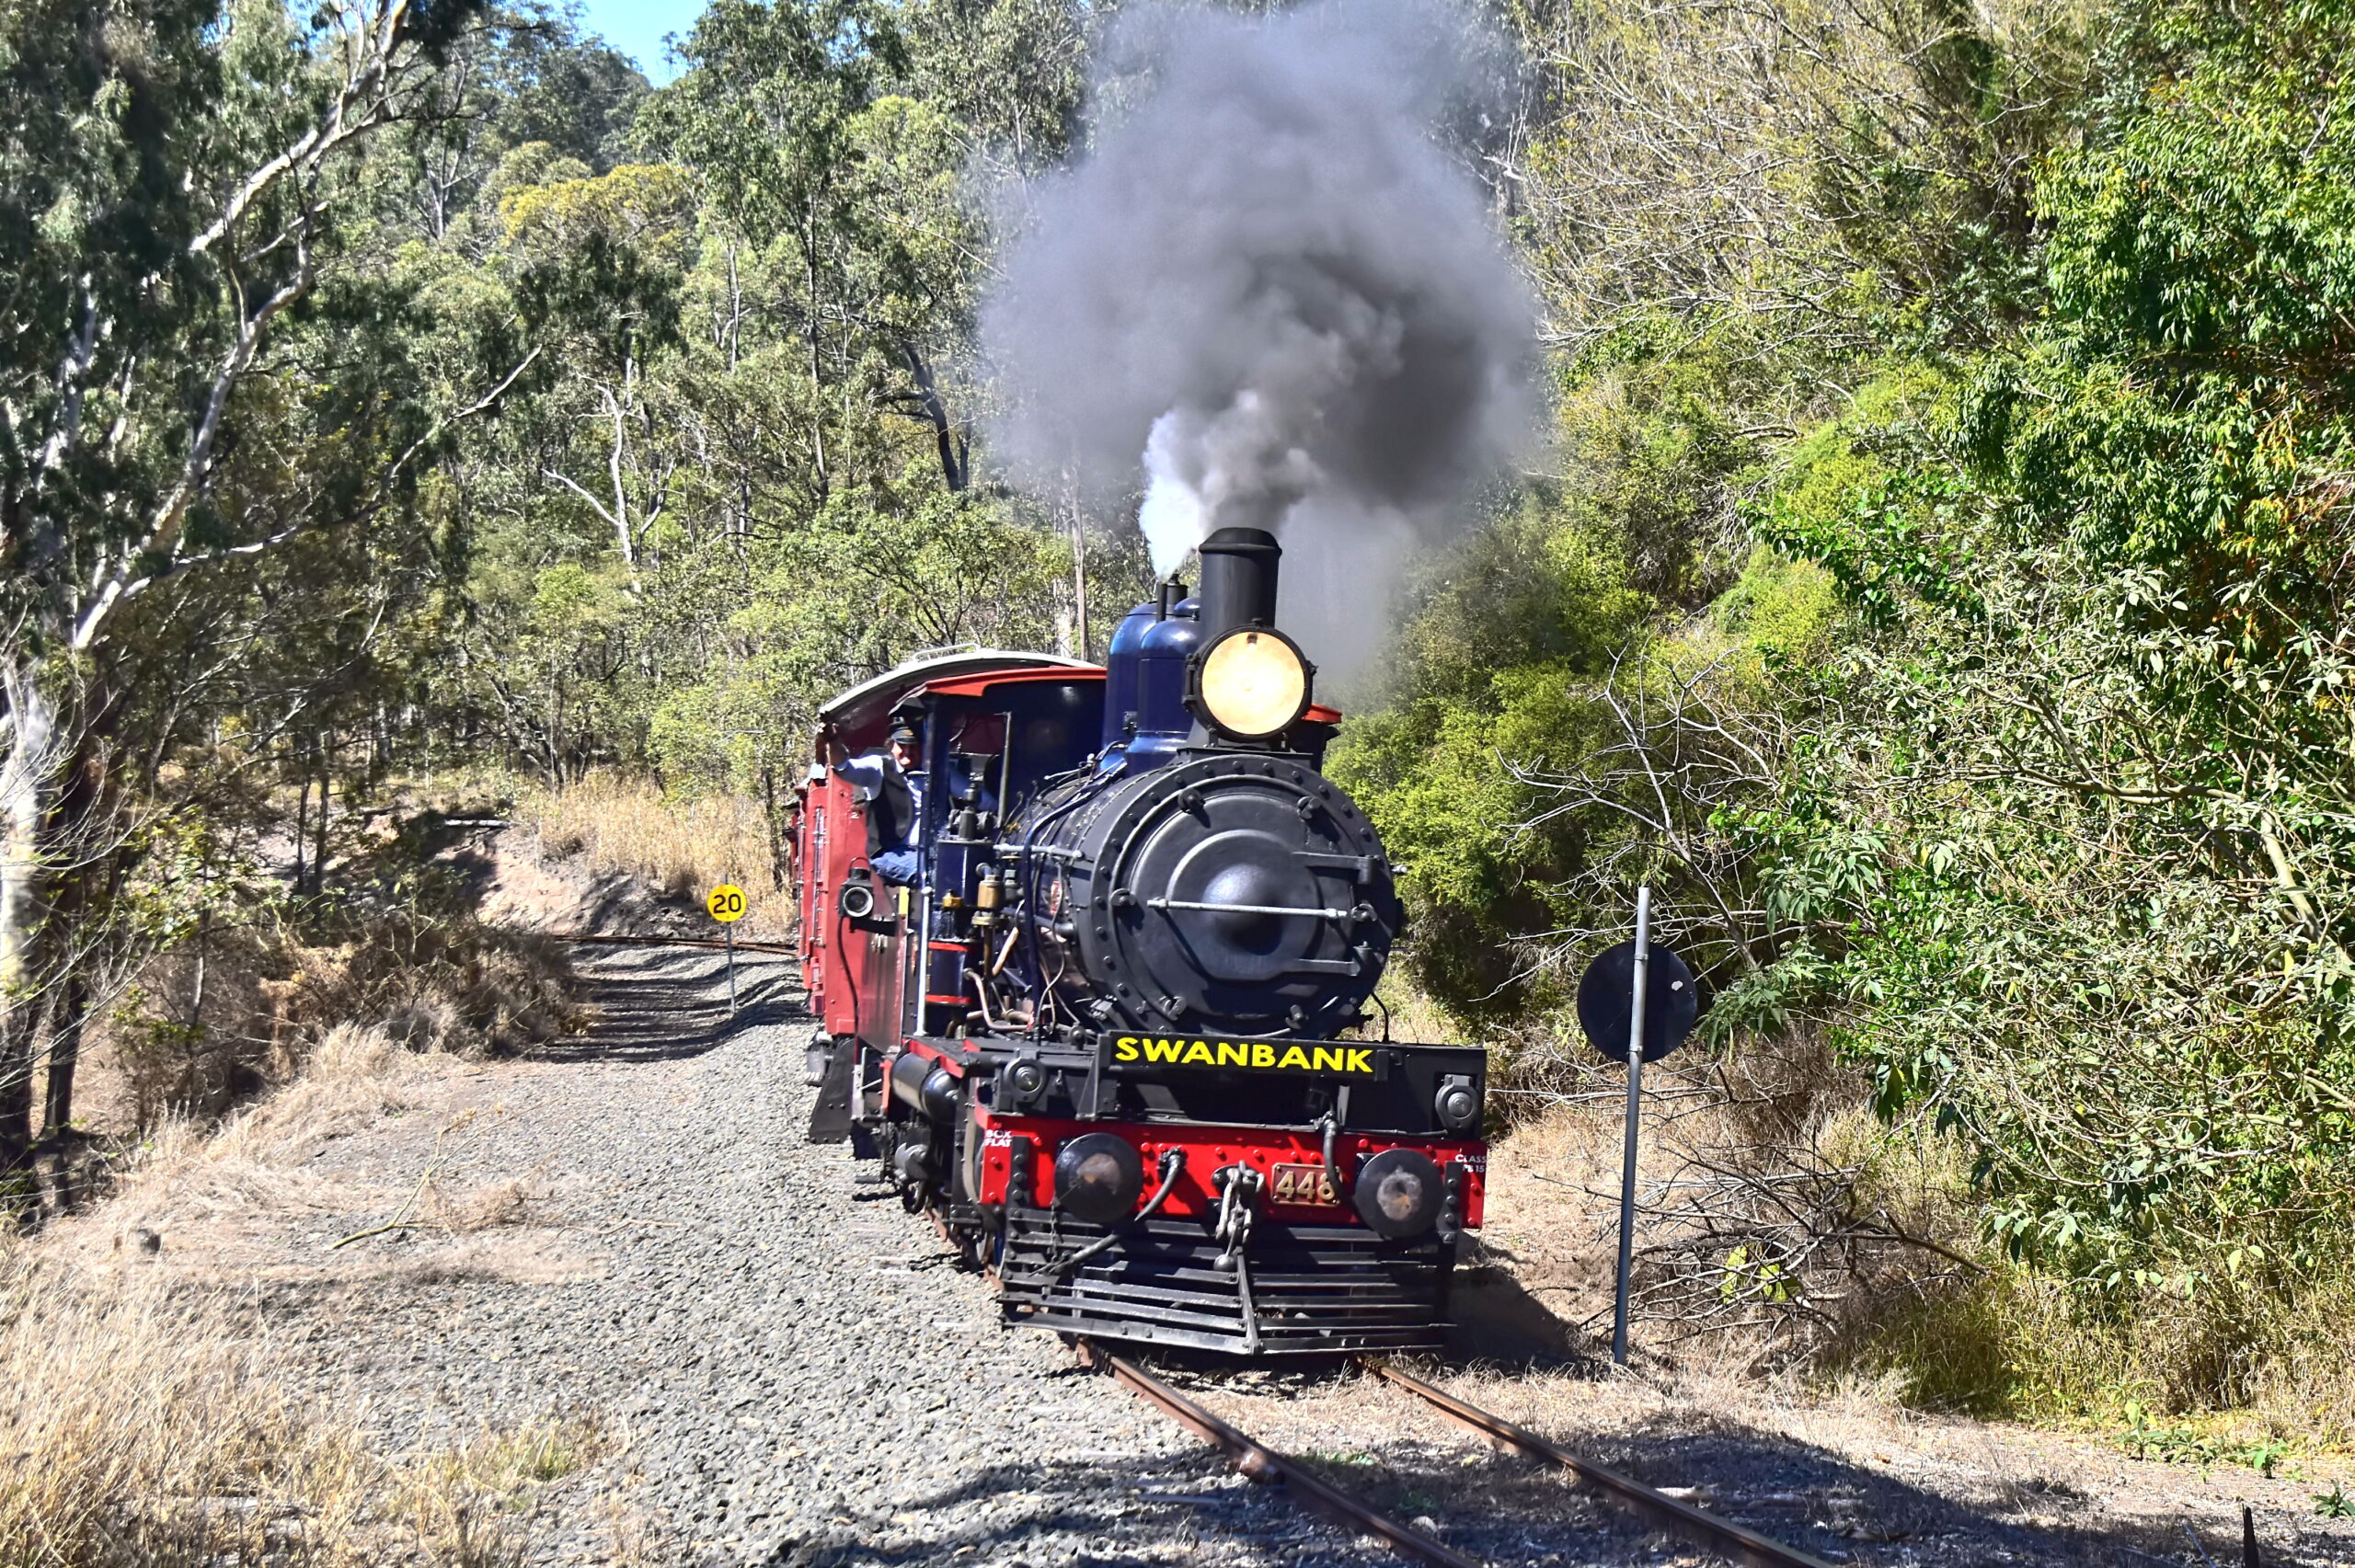 Queensland Pioneer Steam Railway in Swanbank